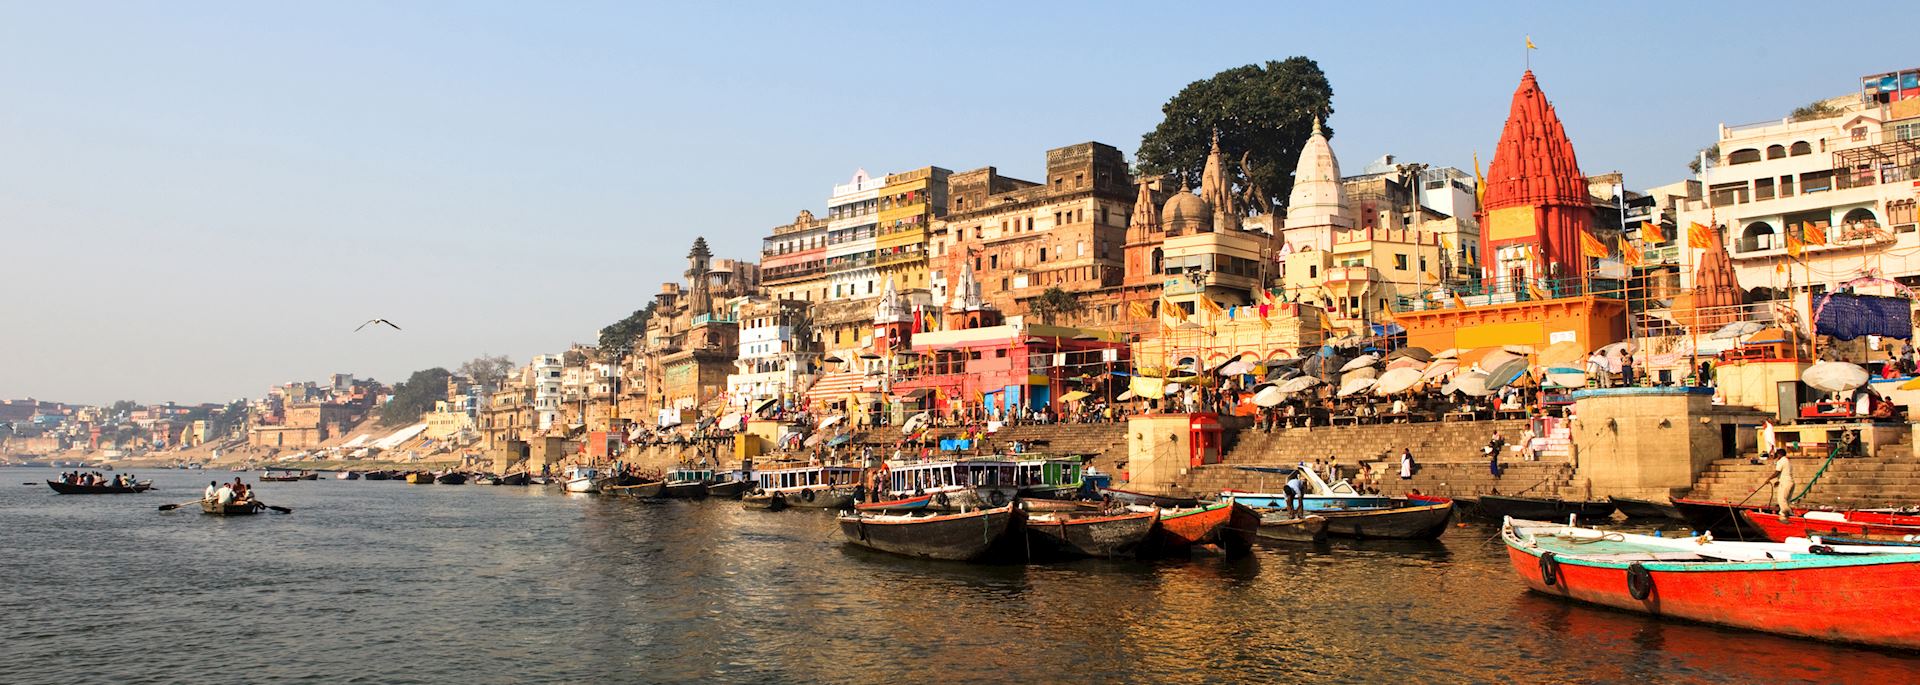 Riverside ghats, Varanasi, India 